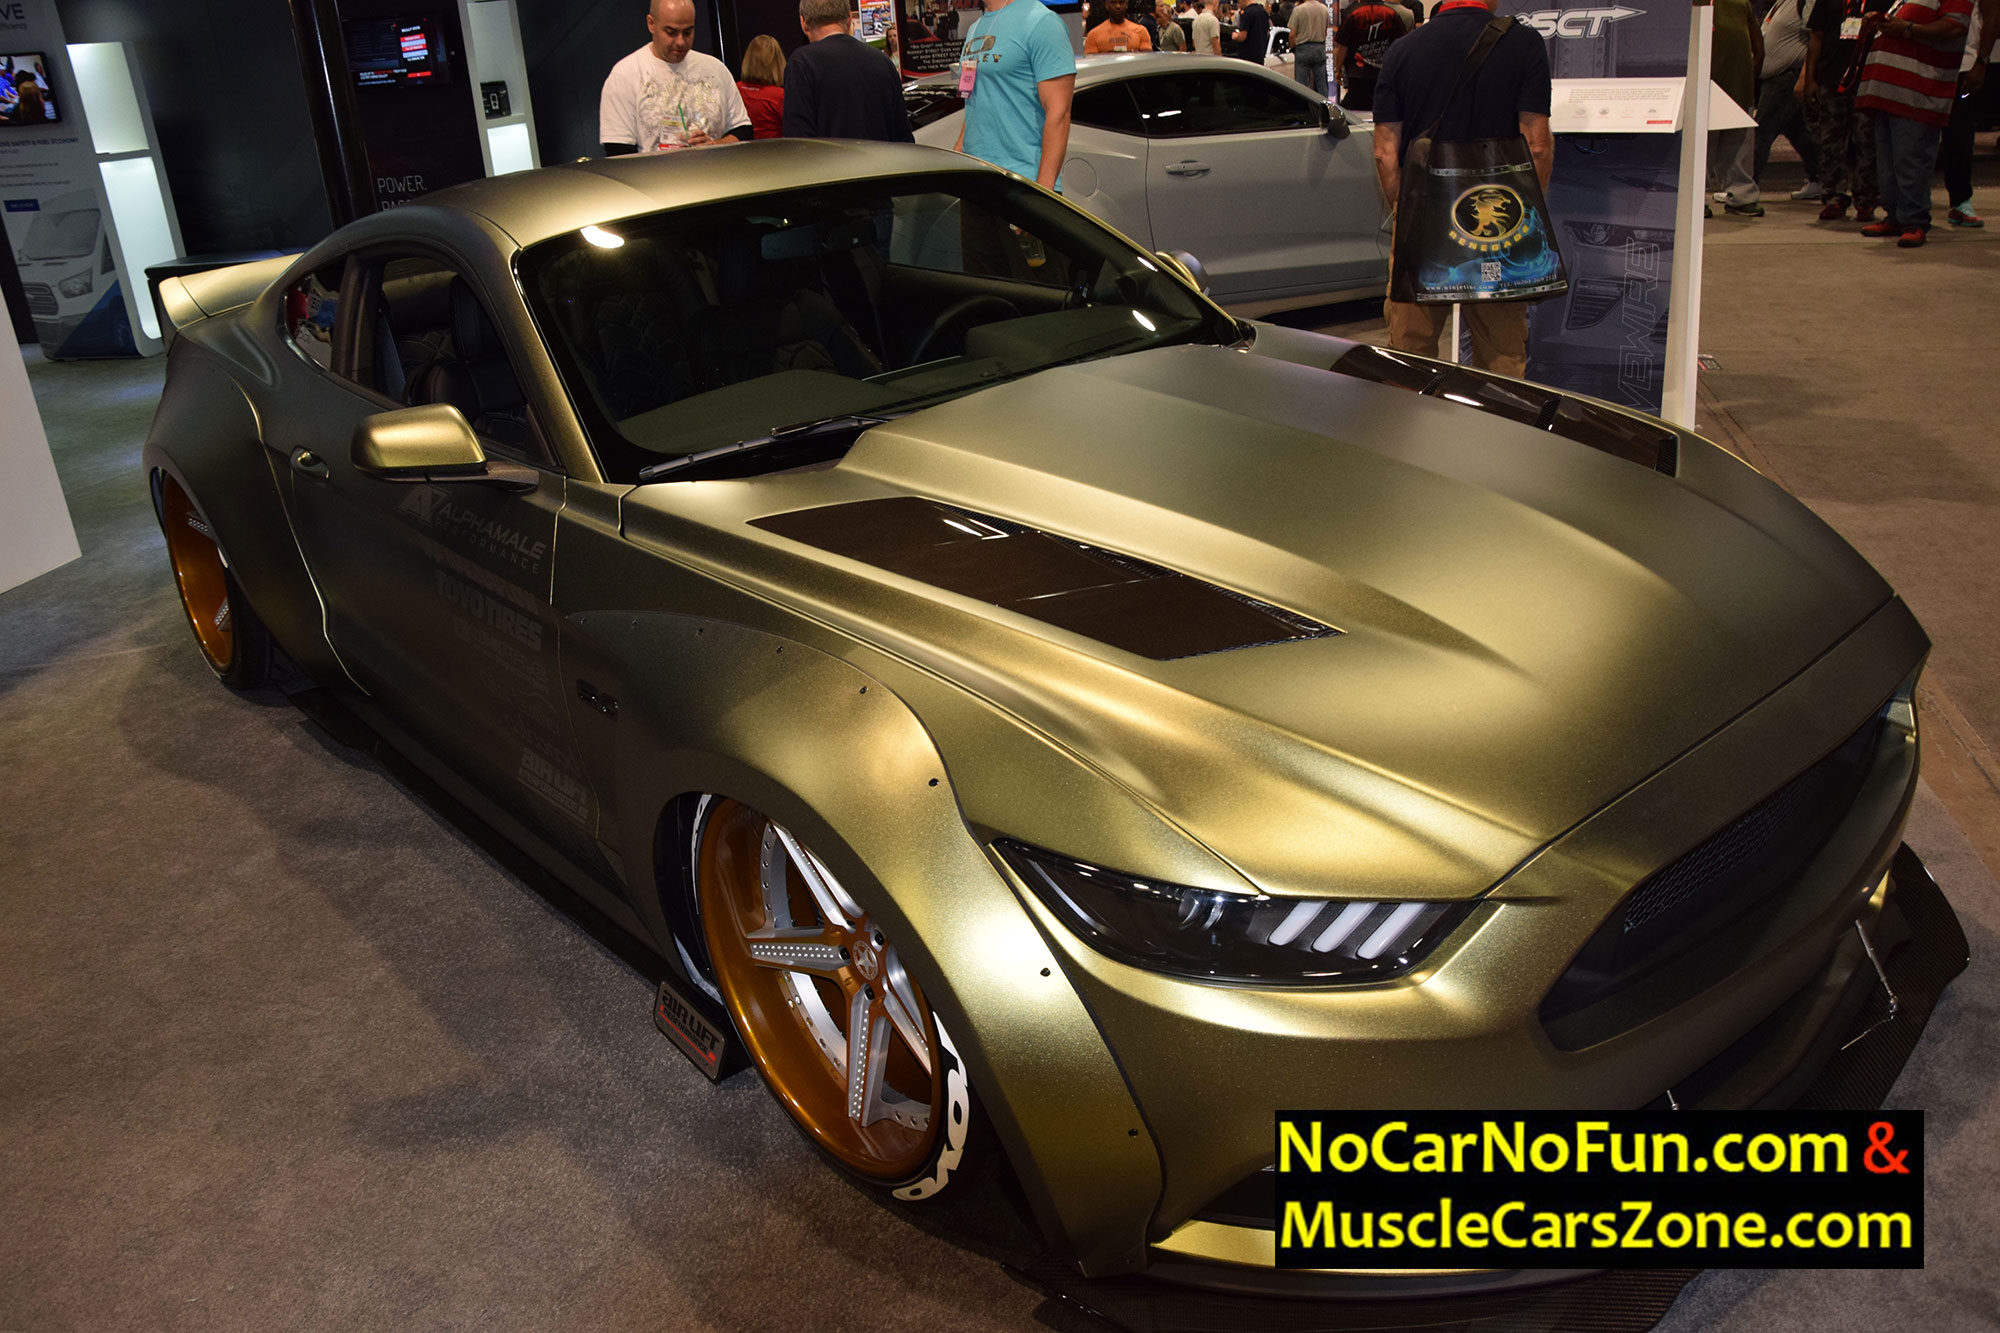 Ford Mustang GT Team Antidote 2 - Sema Show 2016 Vegas